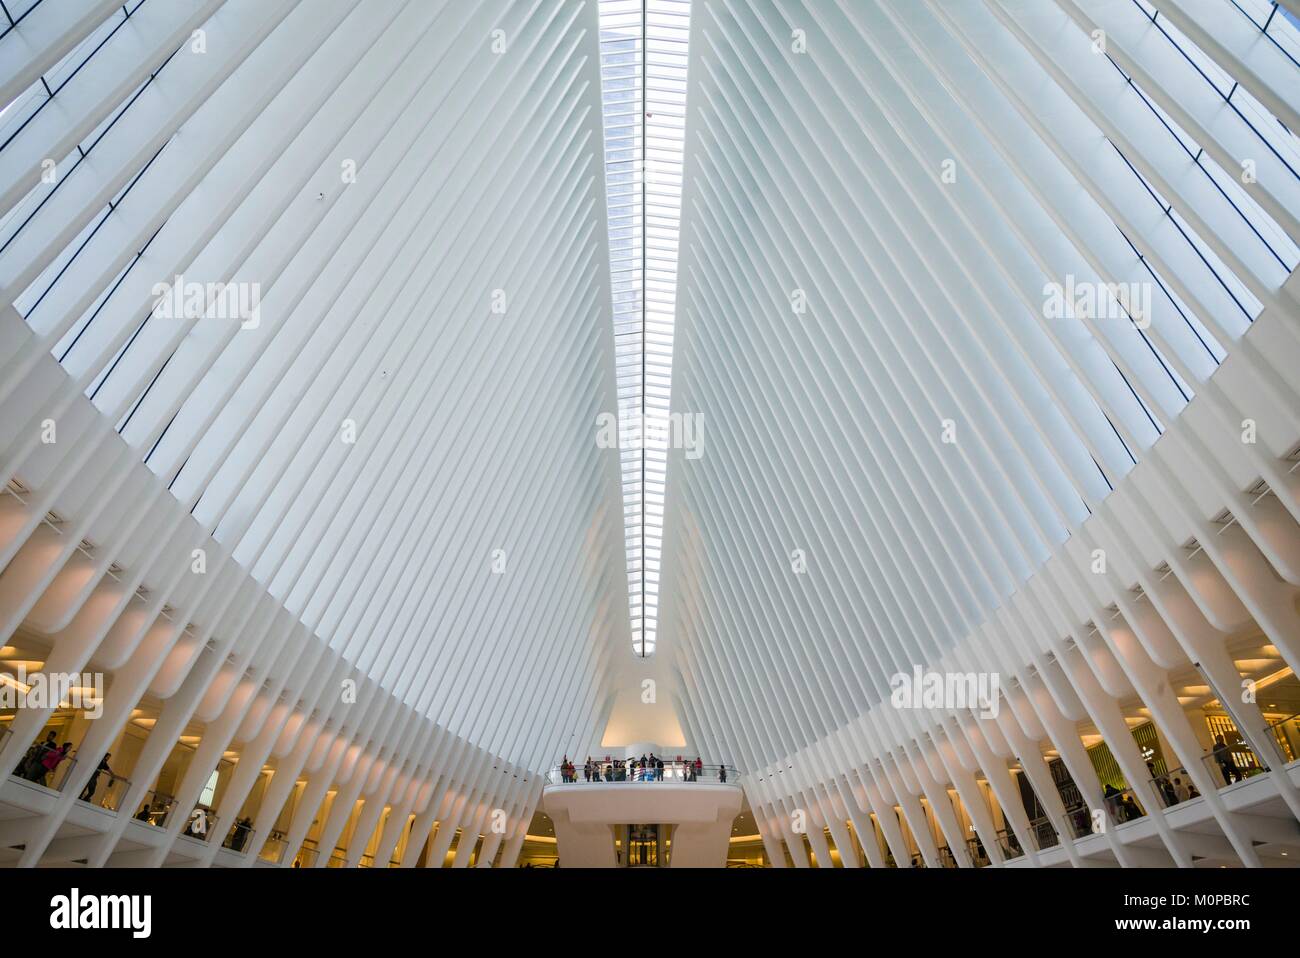 United States,New York,New York City,Lower Manhattan,The Oculus,World Trade Center PATH train station,designed by Santiago Calatrava,interior Stock Photo